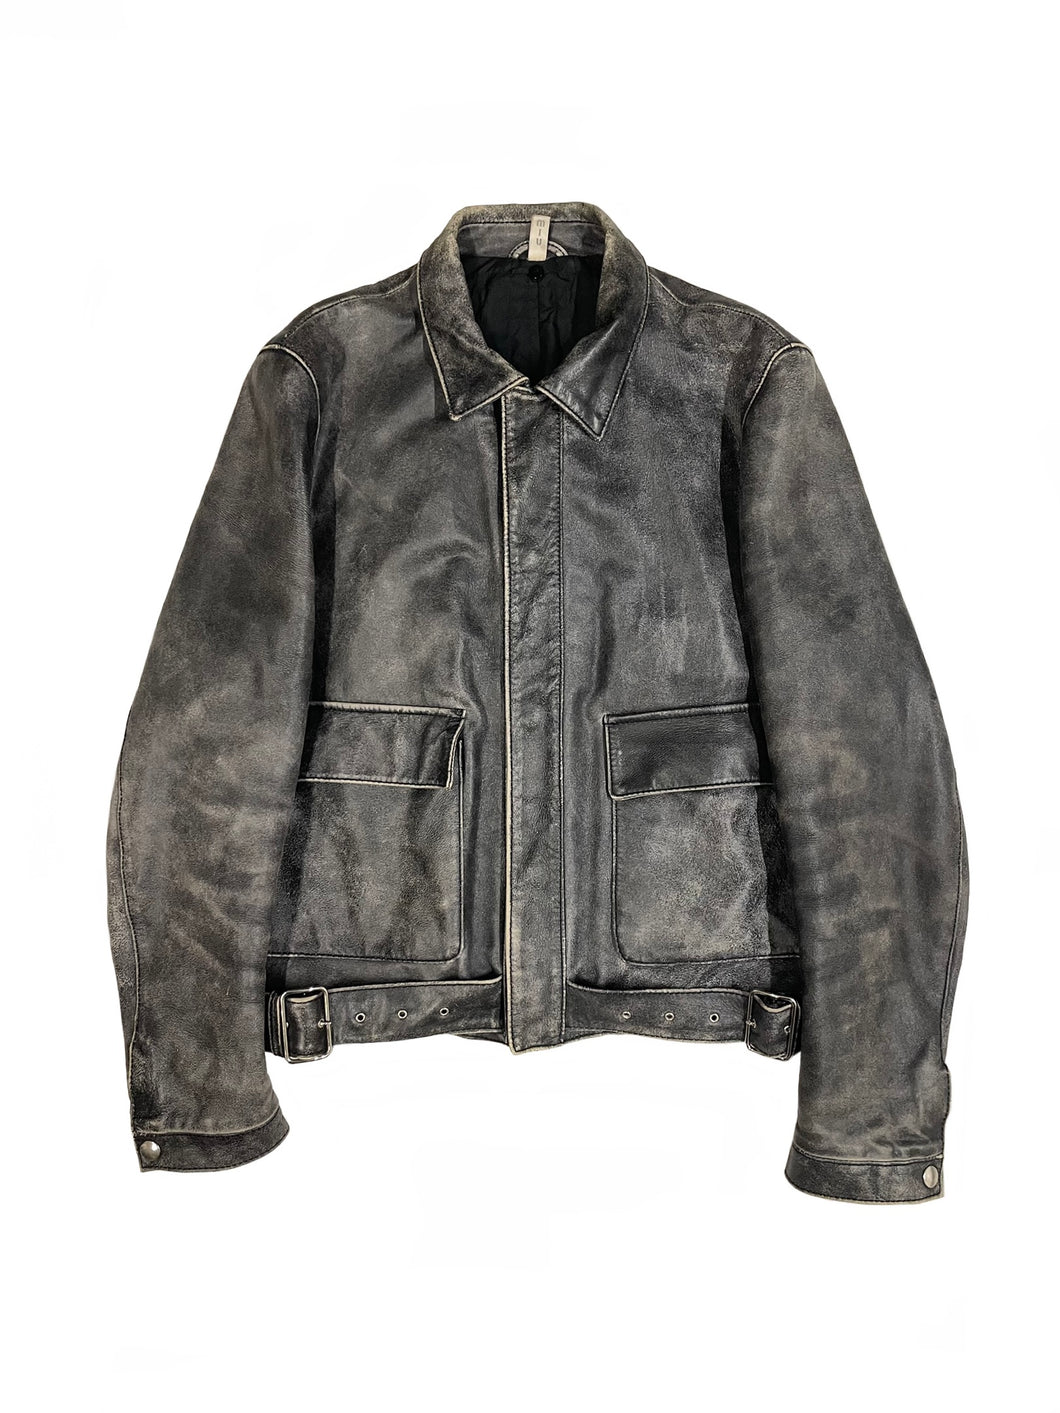 AW2001 Miu Miu distressed leather belted jacket